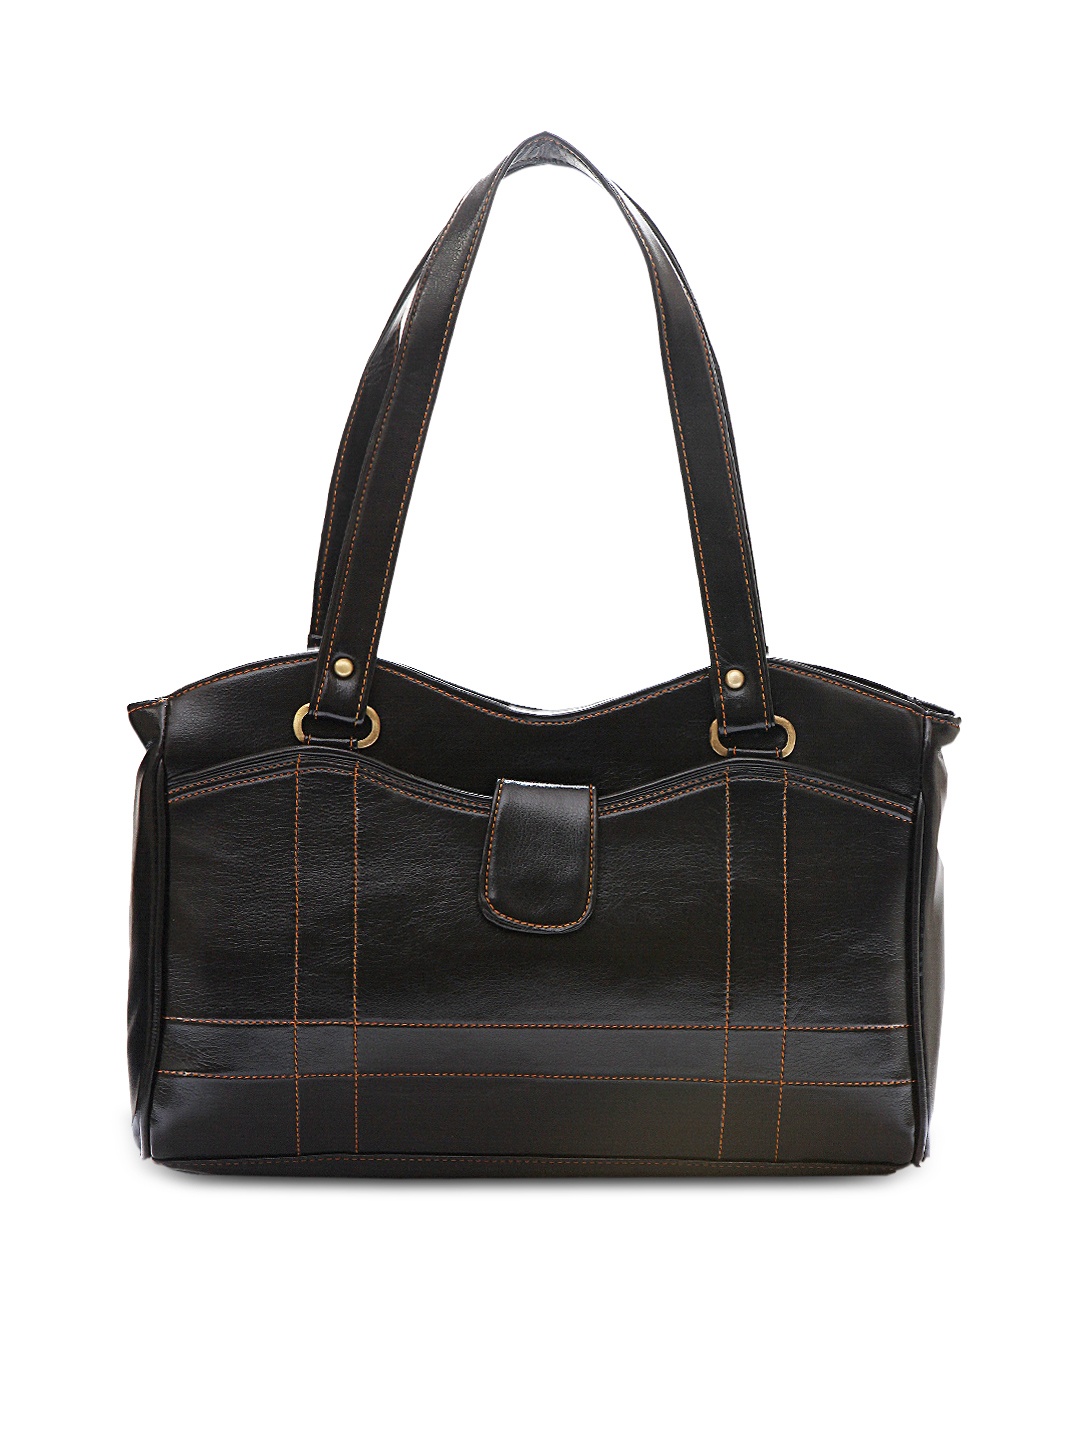 Myntra Utsukushii Black Handbag 670802 | Buy Myntra Utsukushii Handbags at best price online ...